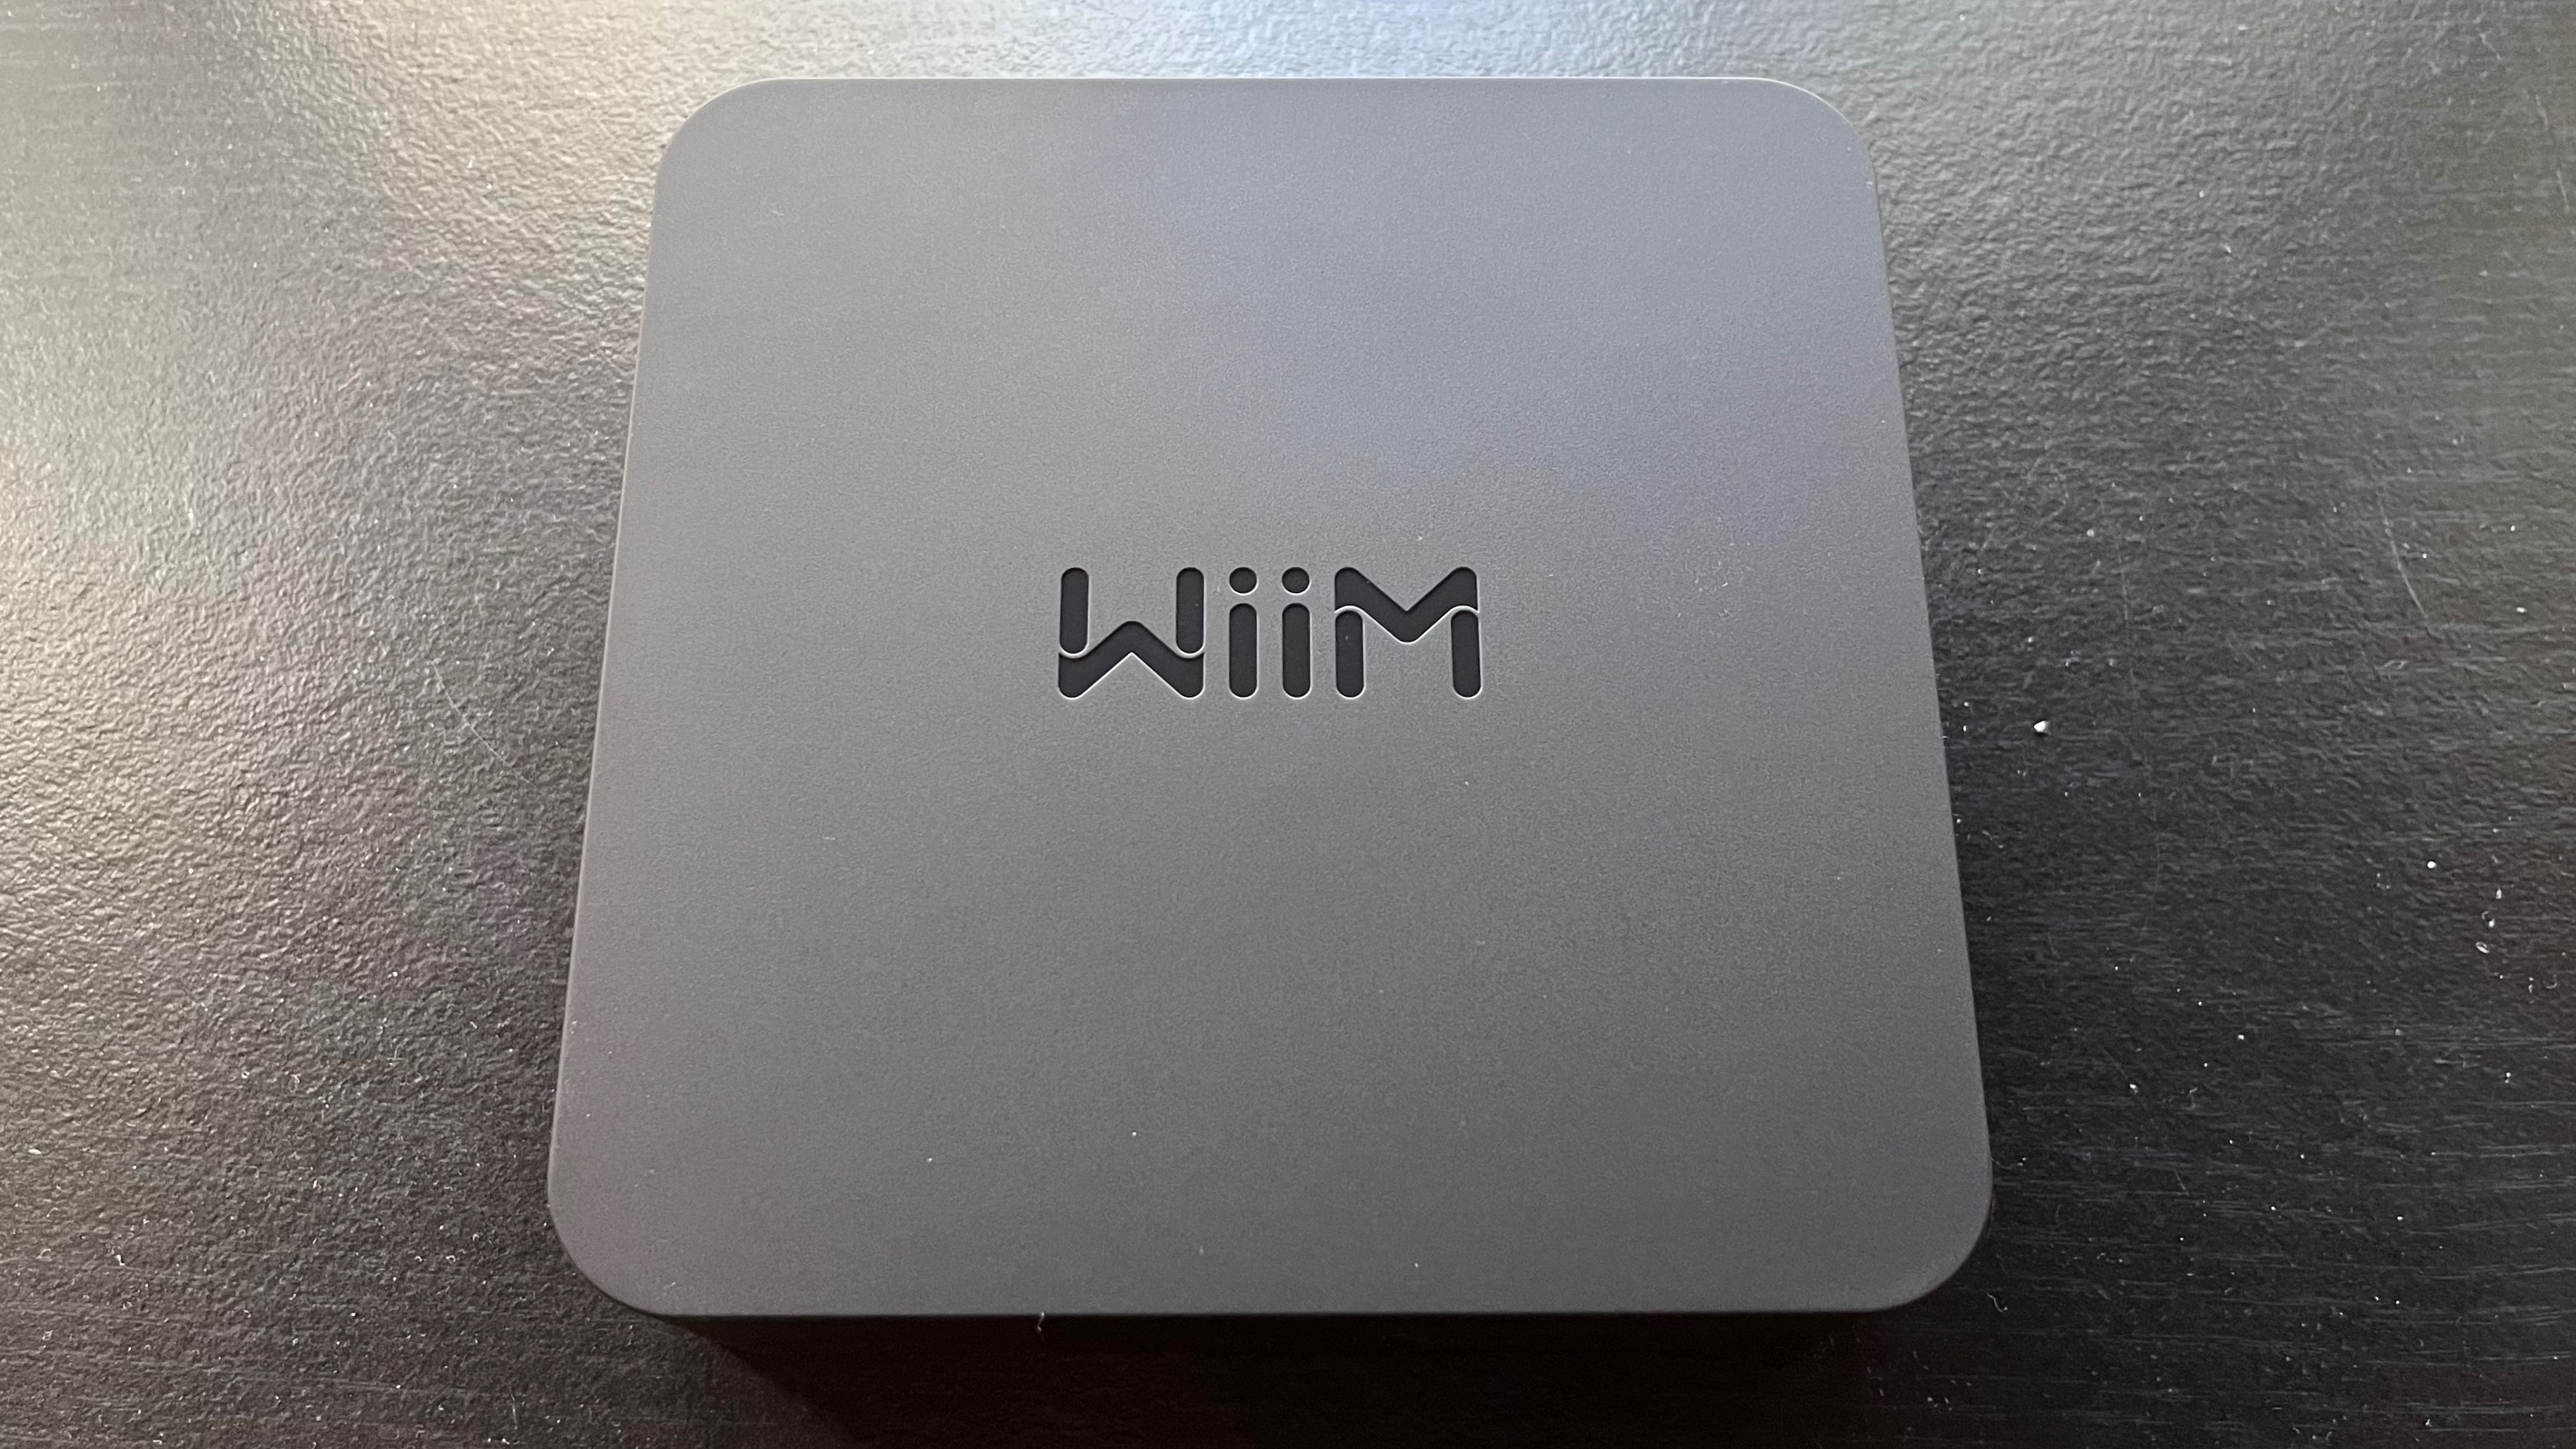 WiiM Pro streamer from above on black background